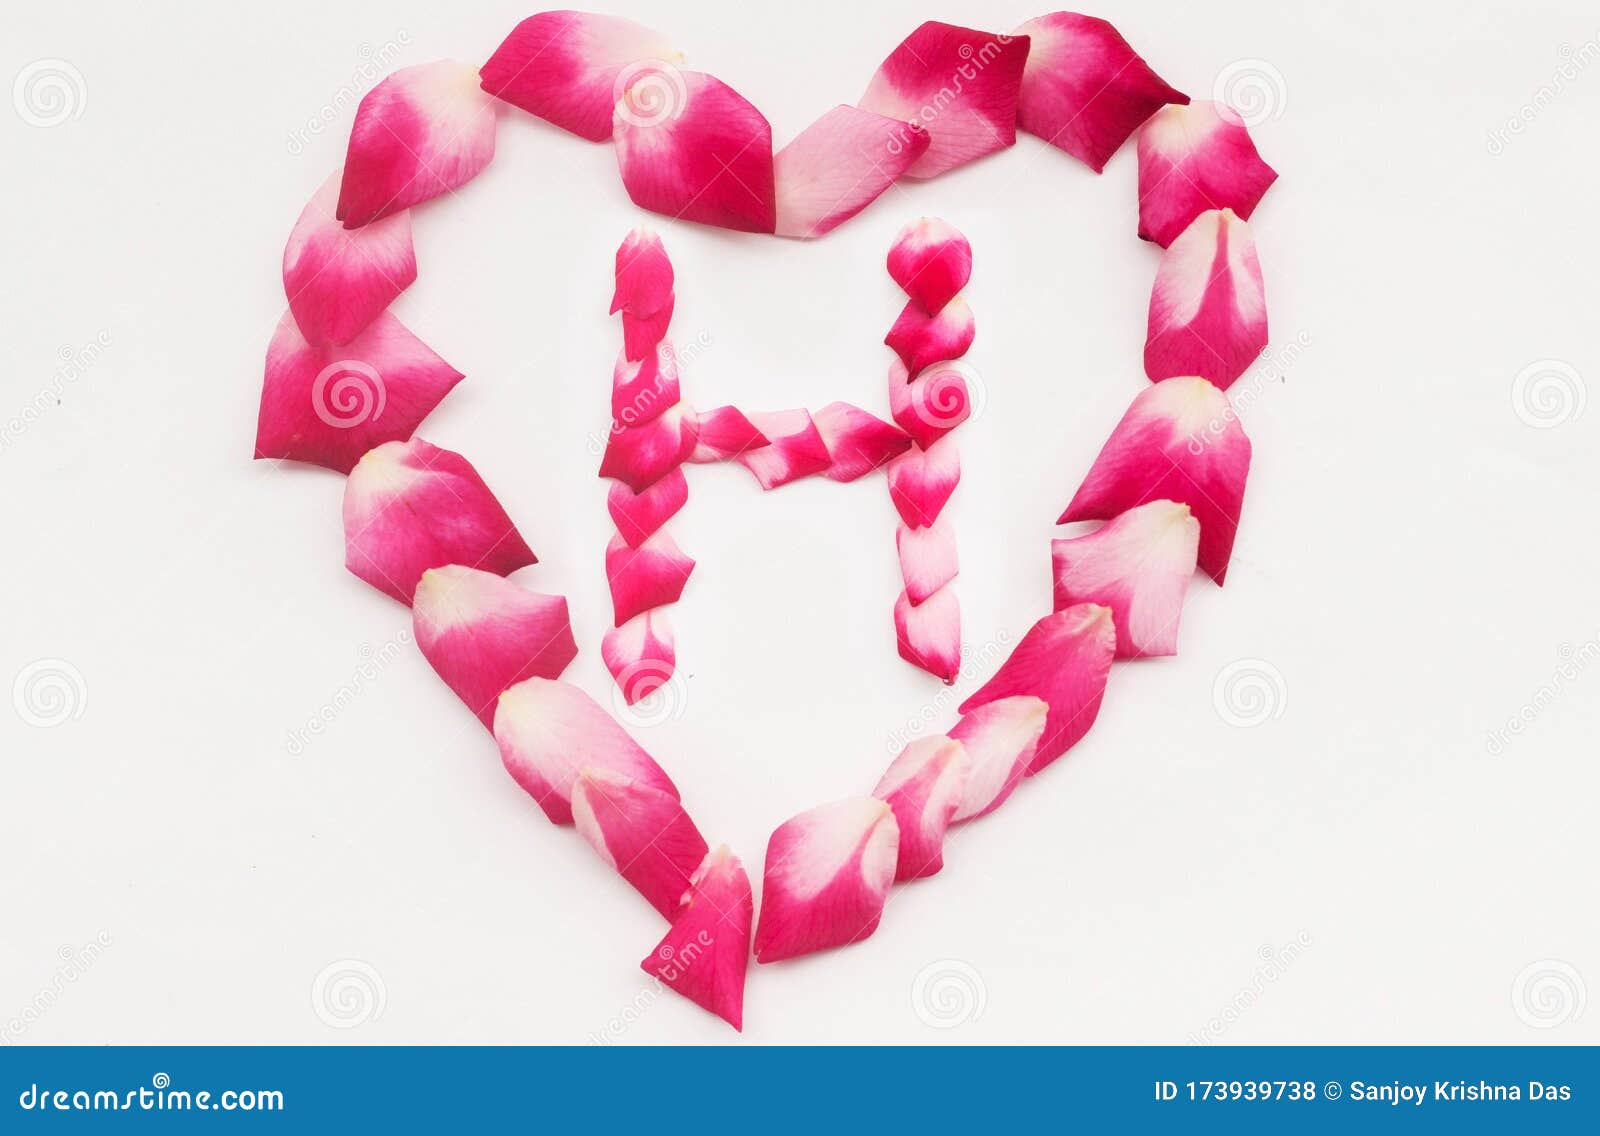 Love Shape Rose Petal Letter H Background Image on White ...